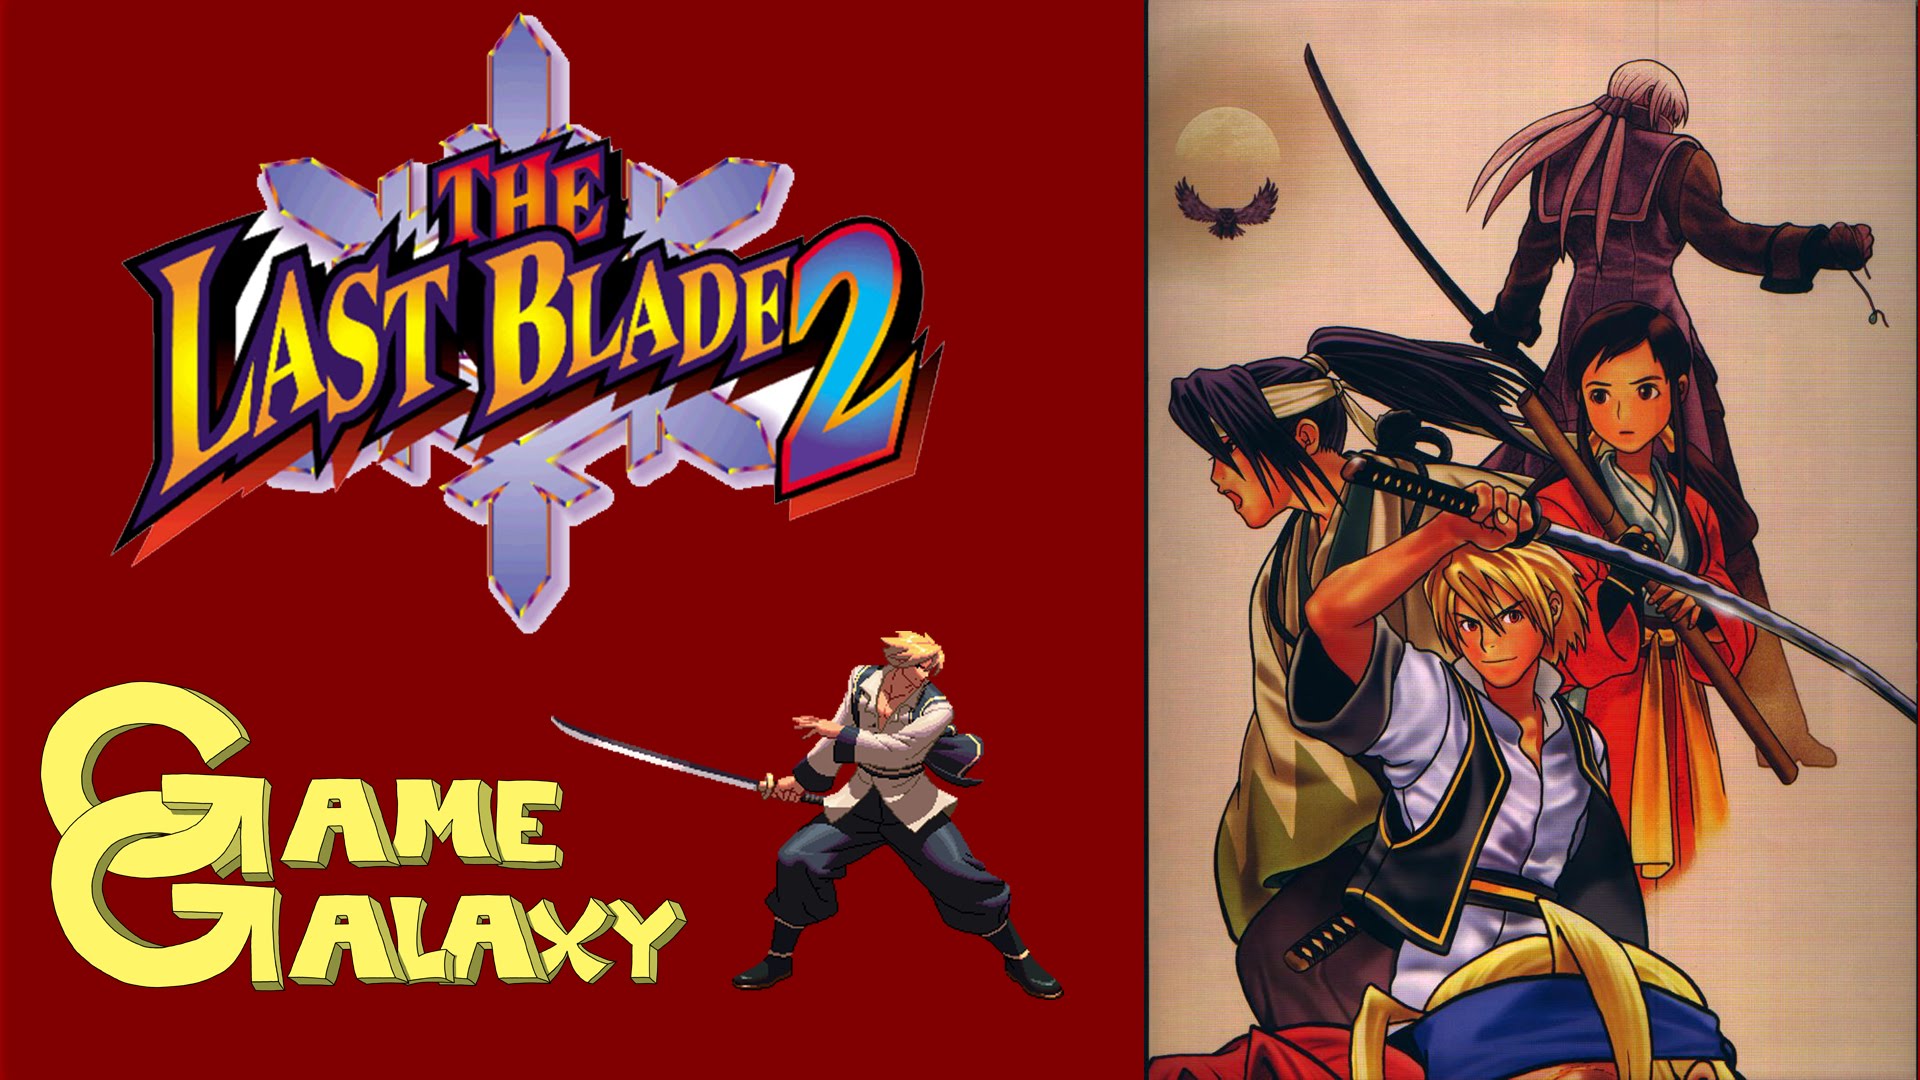 The Last Blade 2 #27